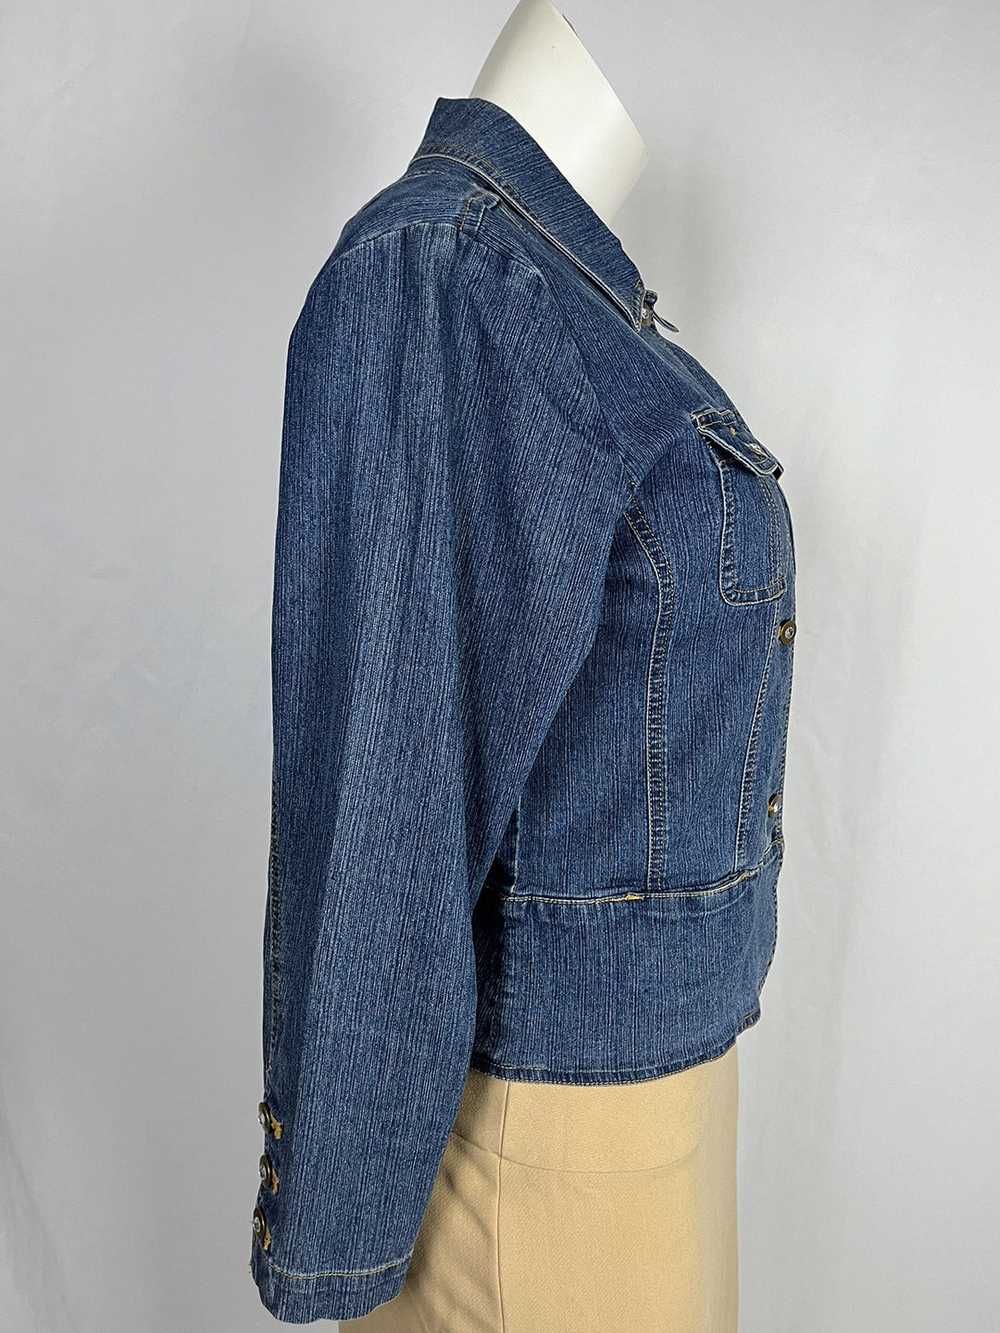 Vintage Erika Size PL (14) Peplum Denim Jacket - image 4